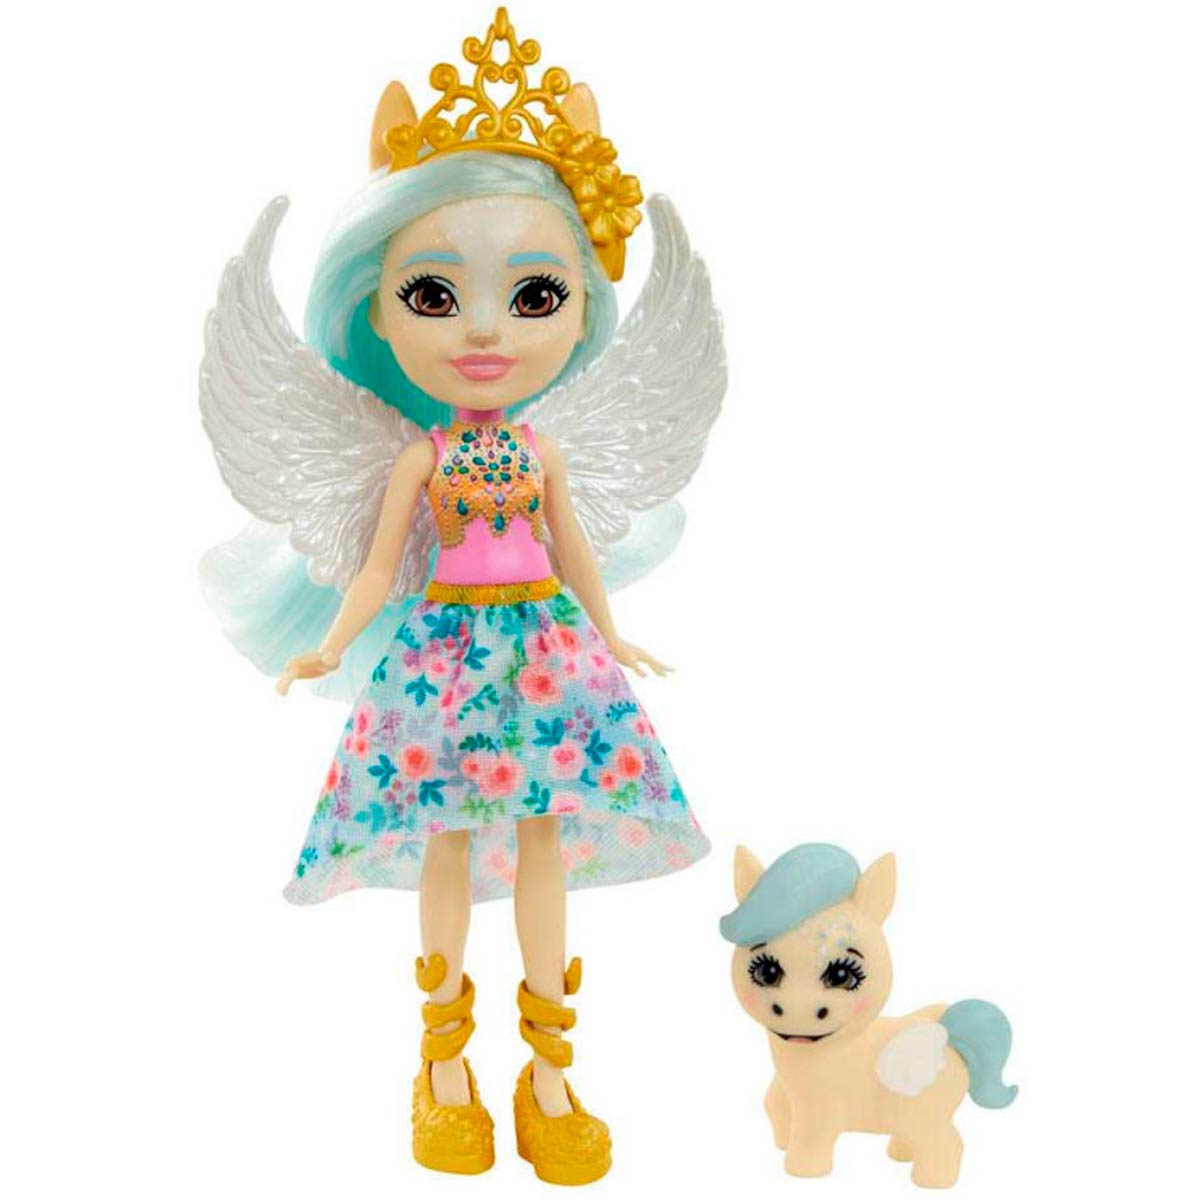 babybest® Caja almacenaje juguetes Little Fairy 